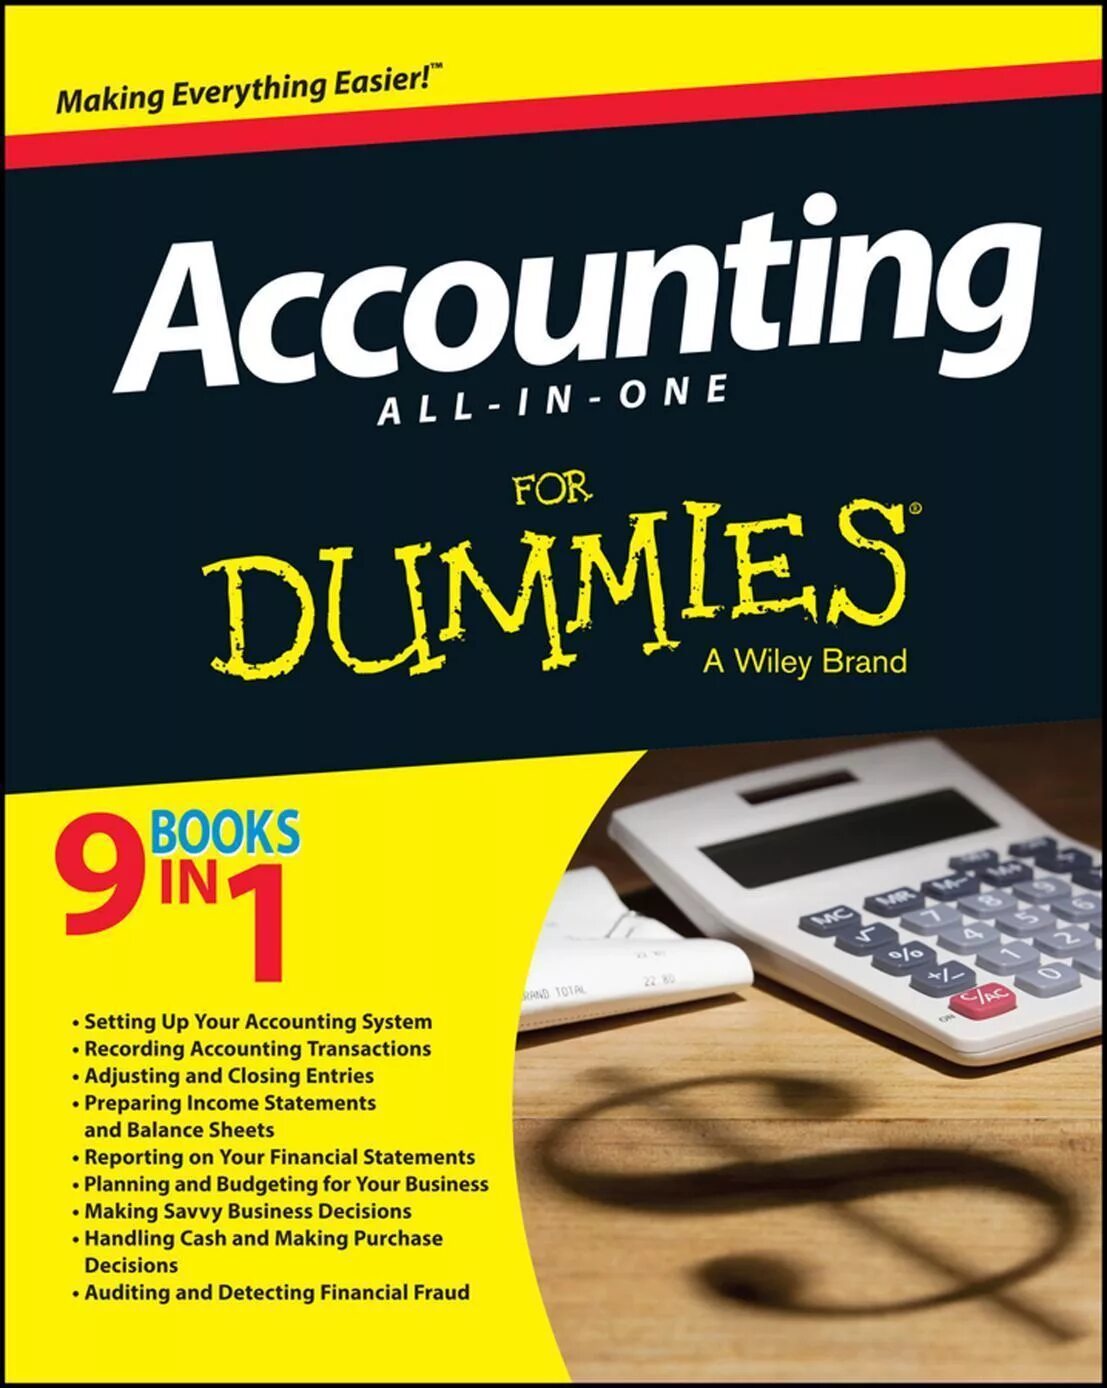 Accounting book. Books for Accounting. Accounting for Dummies. For Dummies books. Бухгалтерский учет.